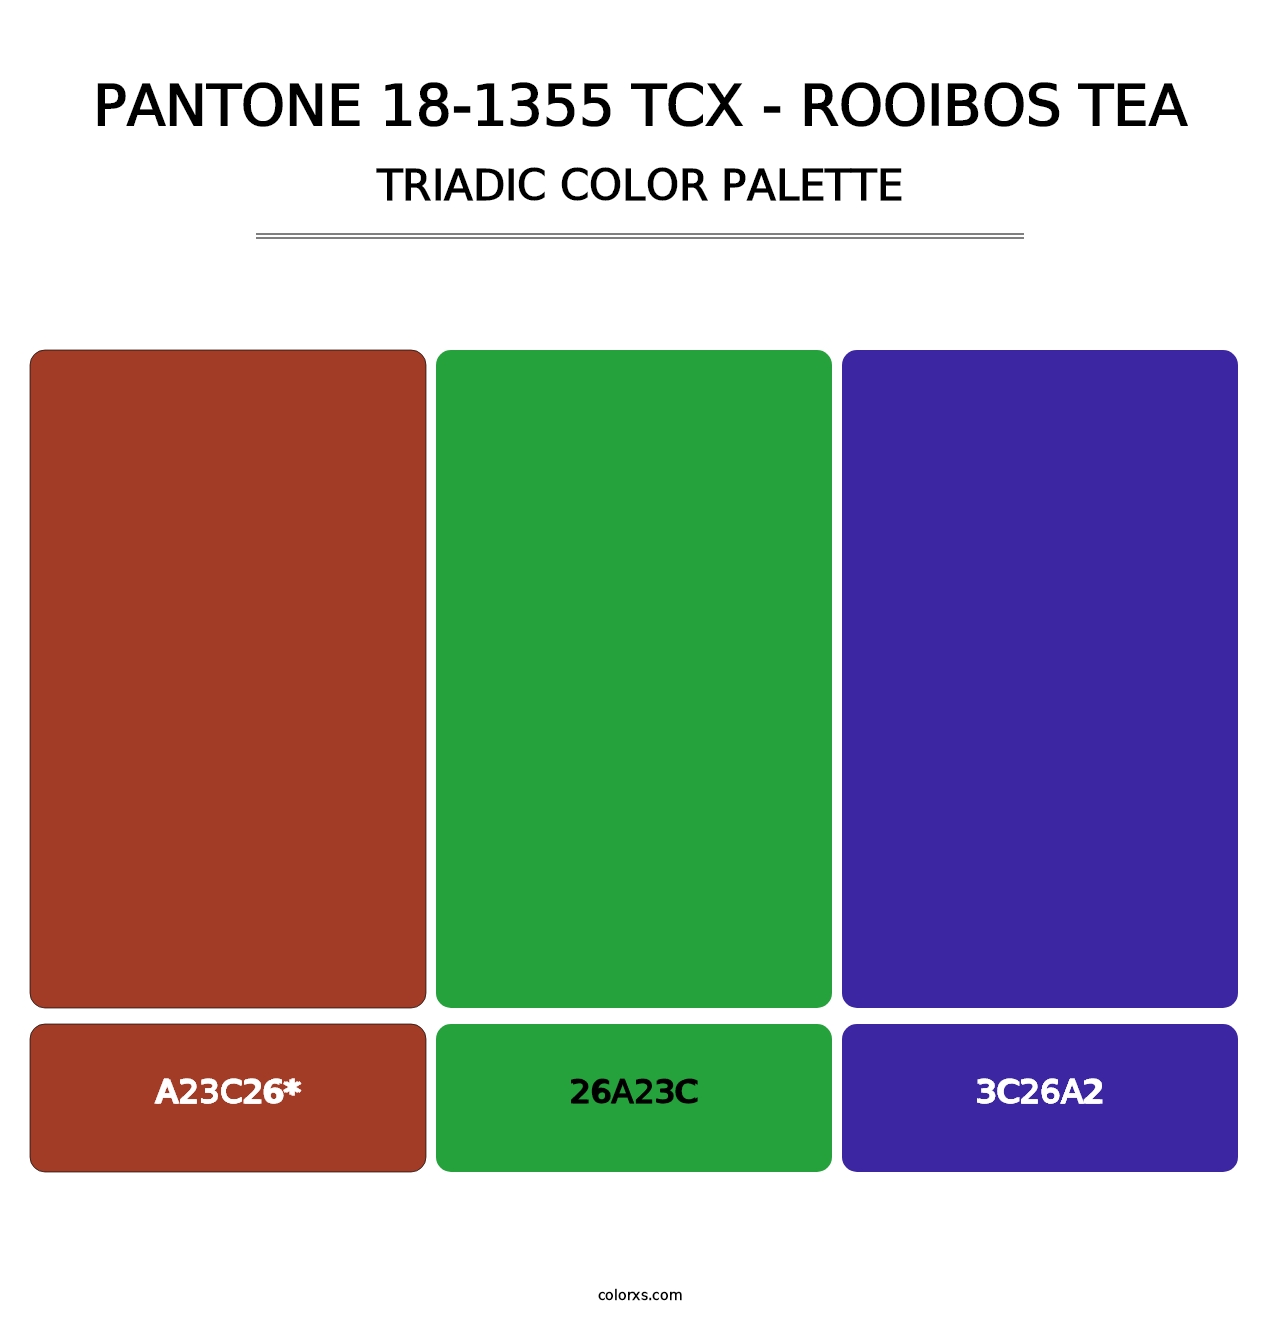 PANTONE 18-1355 TCX - Rooibos Tea - Triadic Color Palette